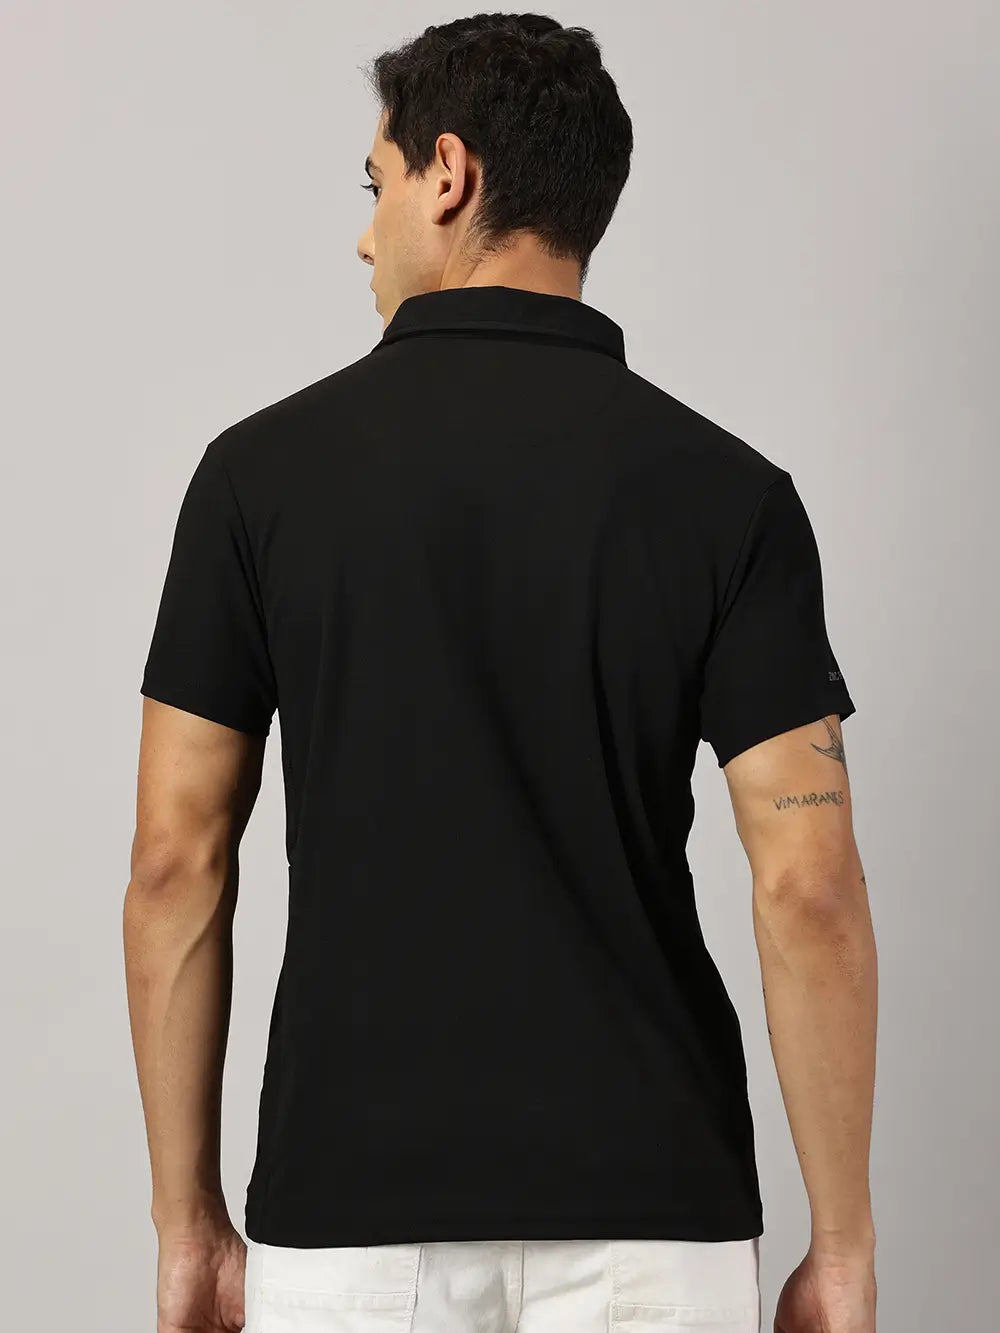 A model wearing Blue Tyga black odor-free polo t-shirt